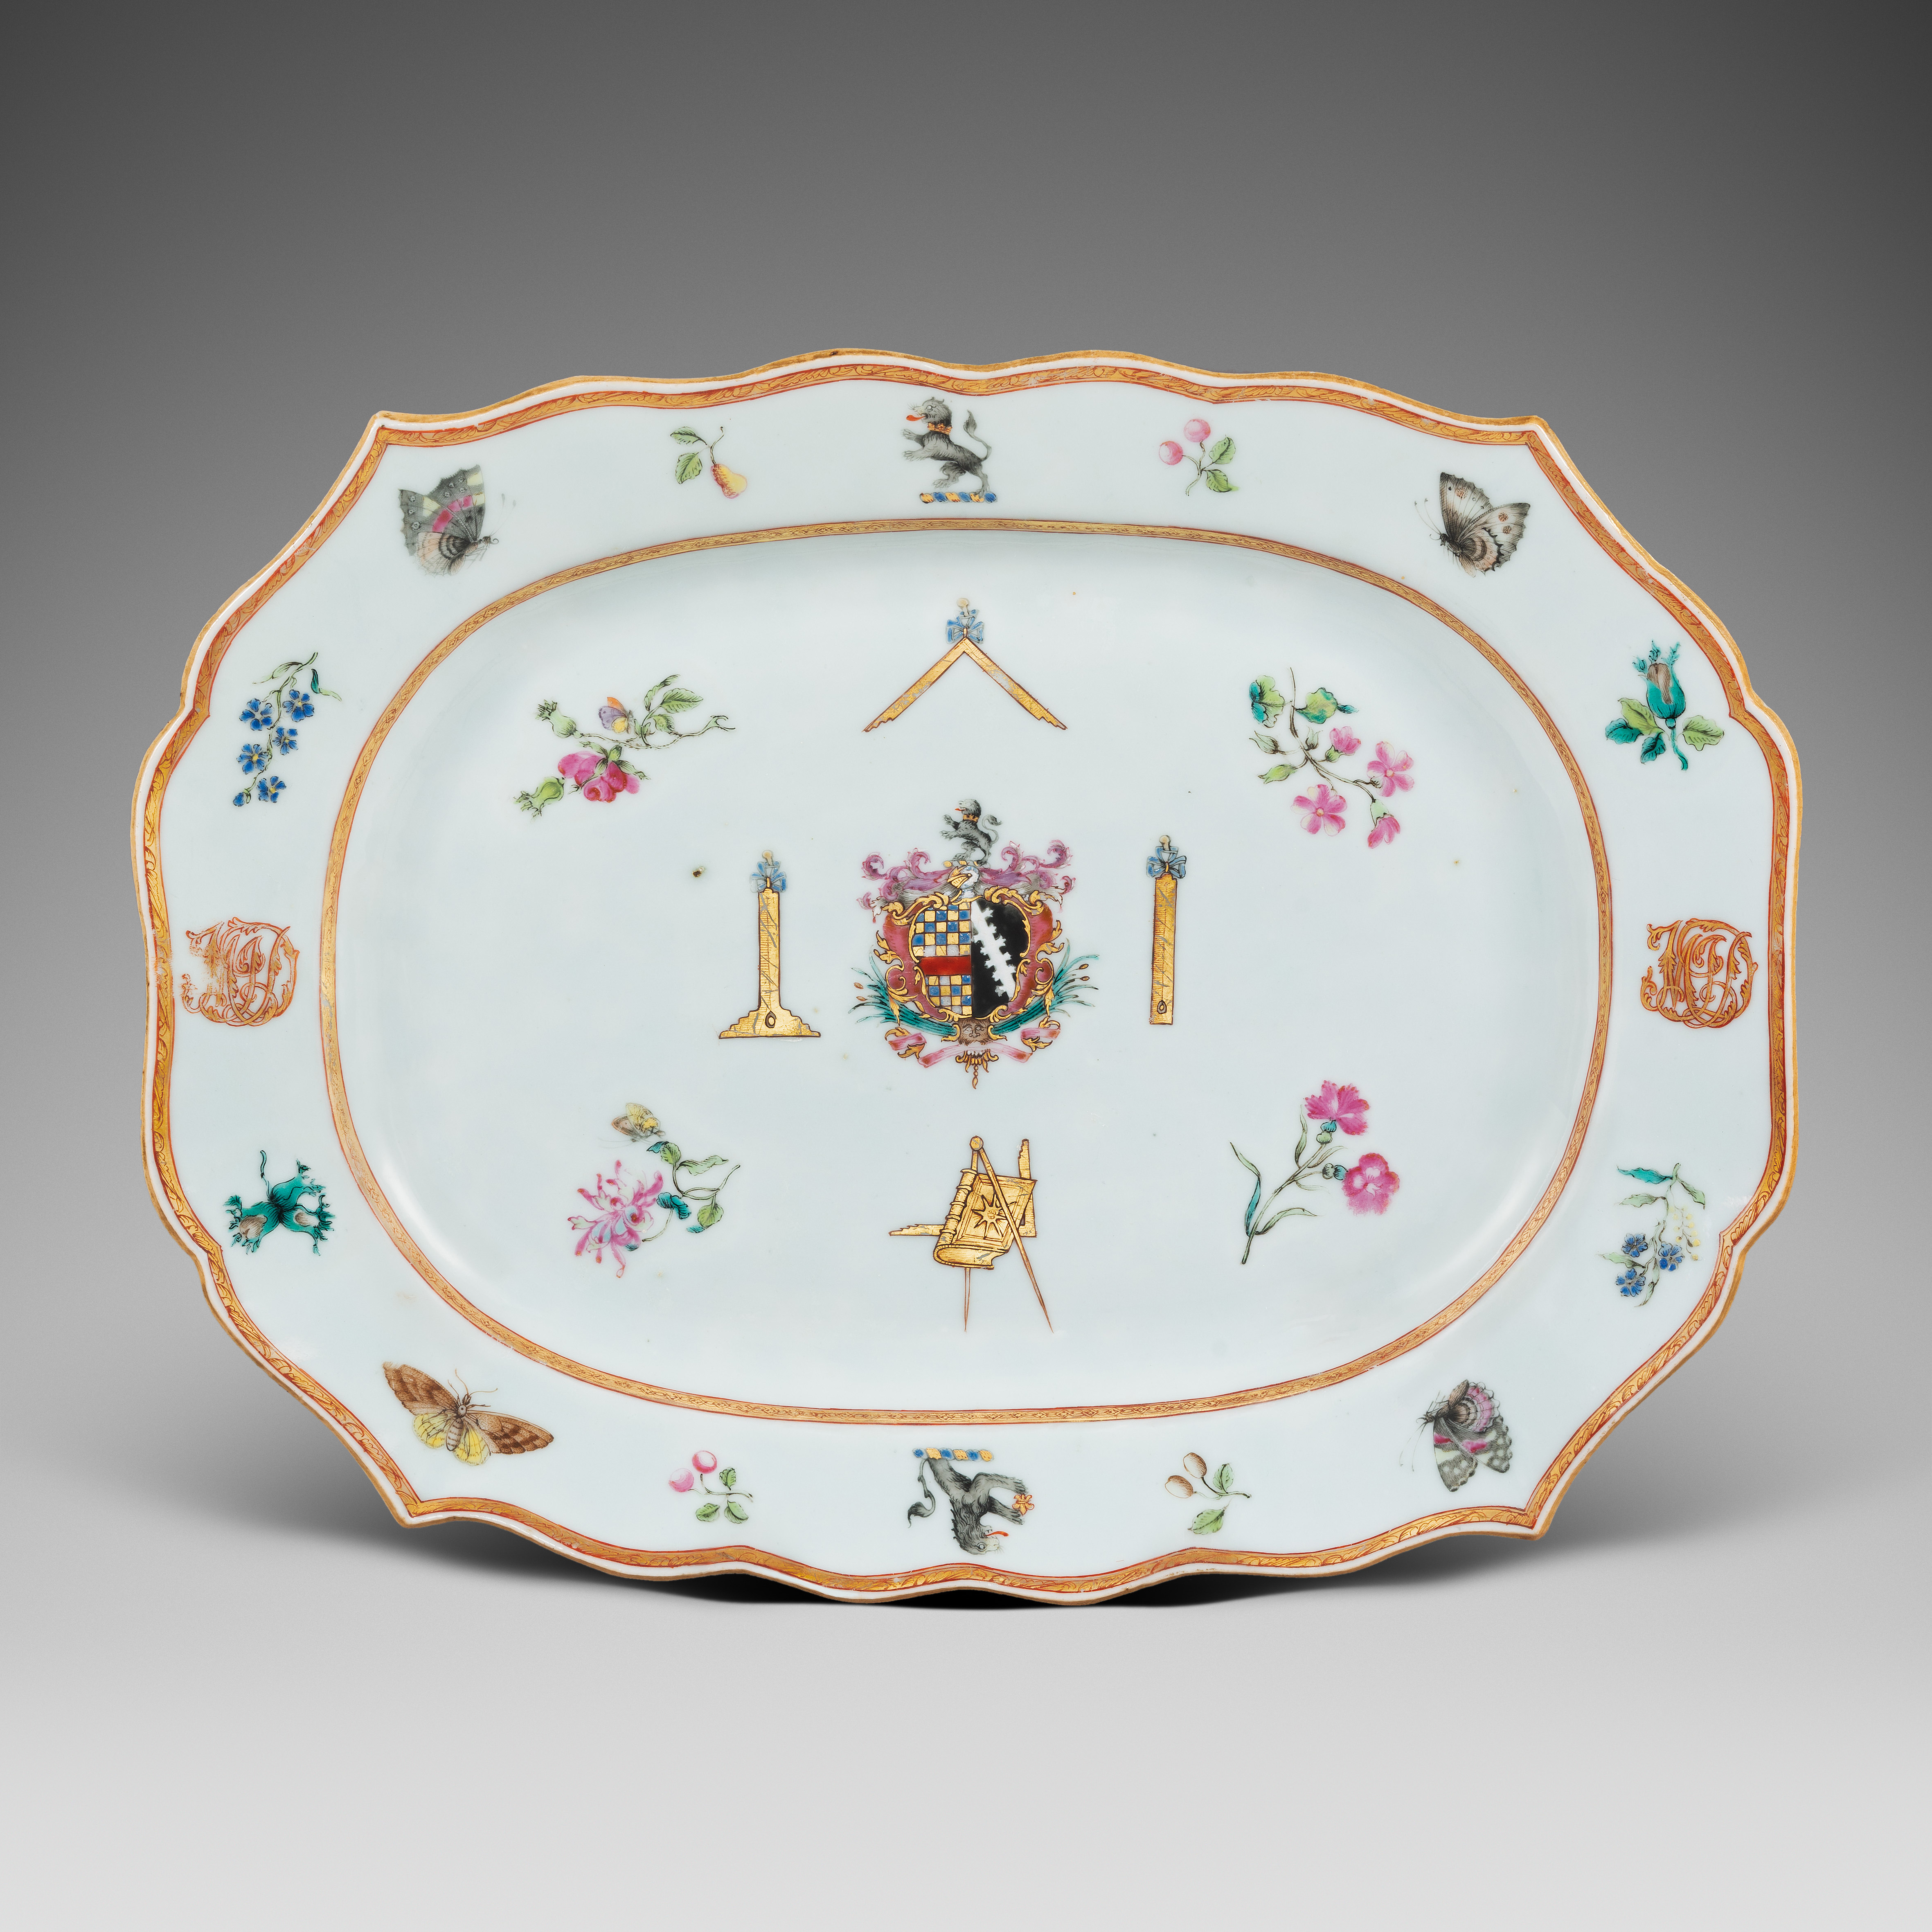 Famille rose Porcelain Qianlong period (1736-1795), circa 1780, China